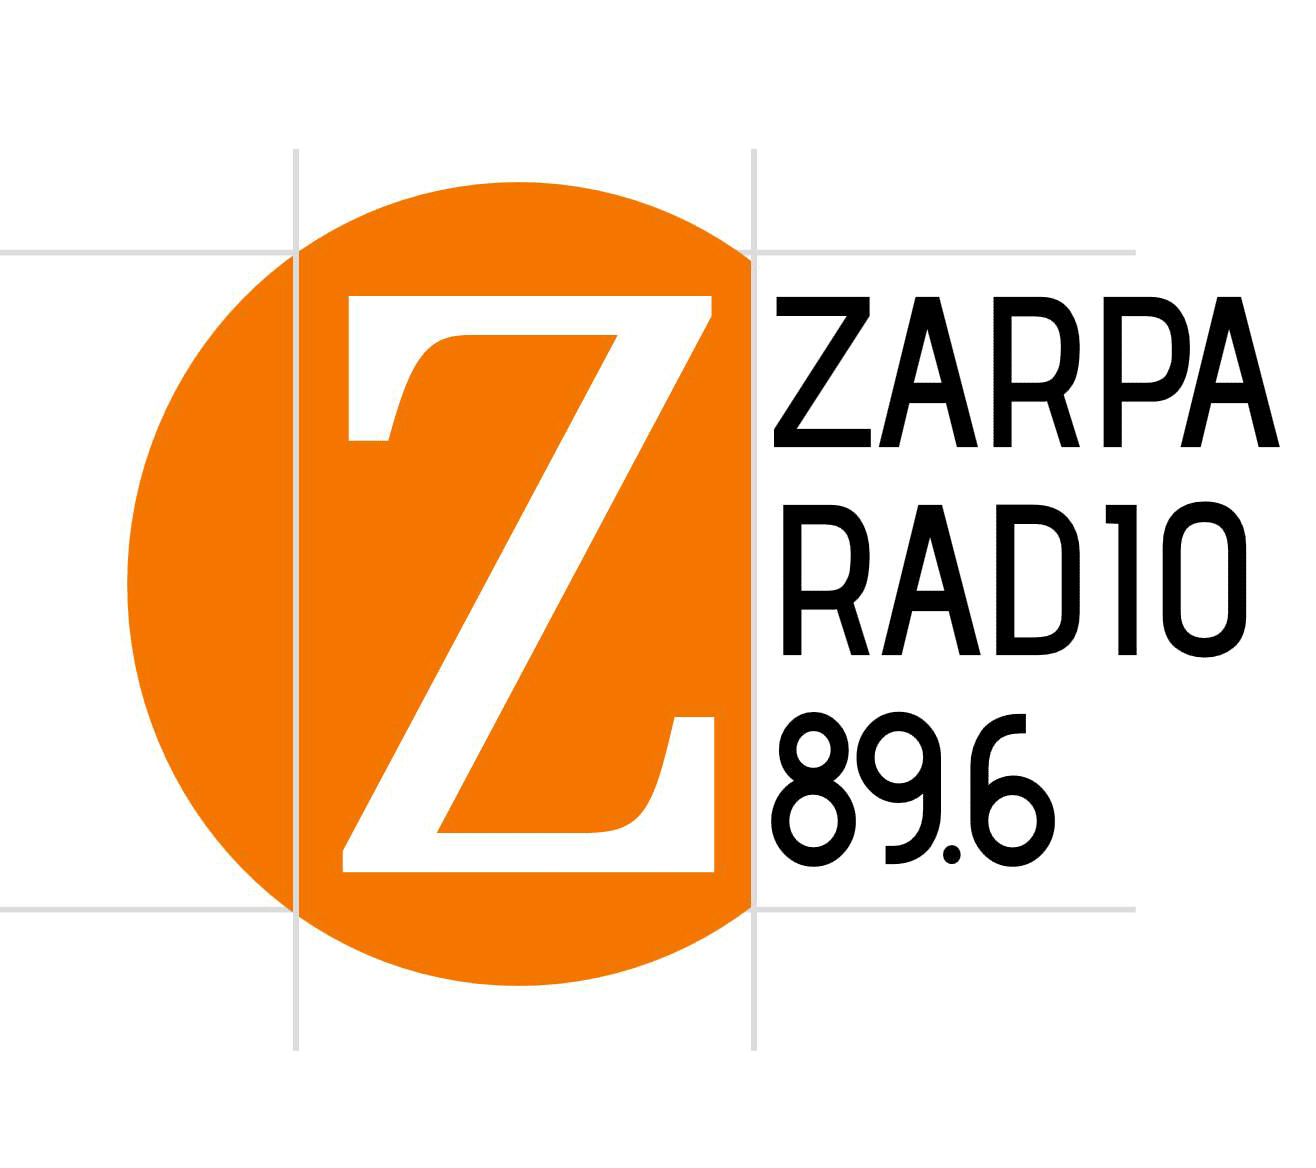 ZARPA RADIO 89.6